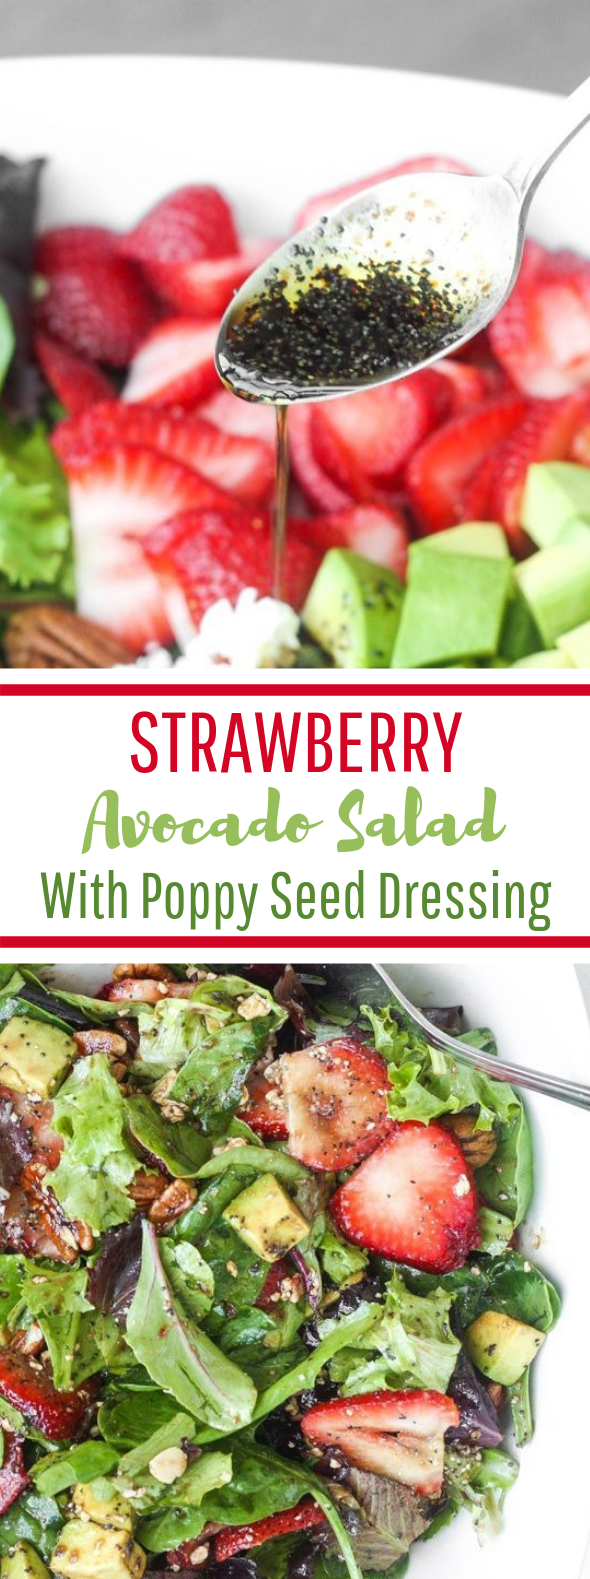 Strawberry Avocado Salad With Poppy Seed Dressing #vegetarian #salad